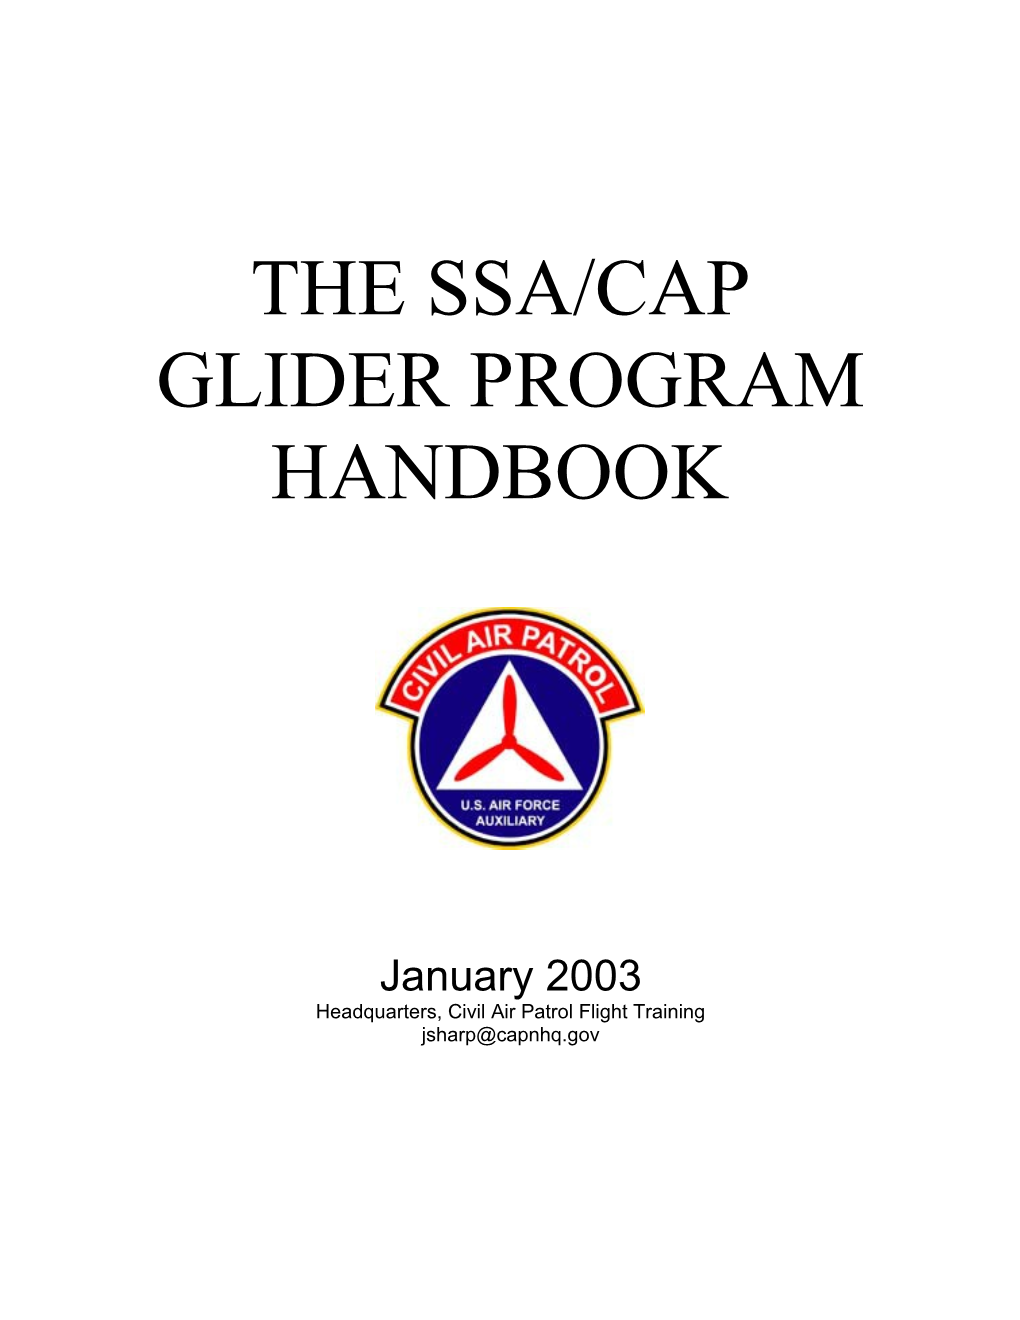 The Ssa/Cap Glider Program